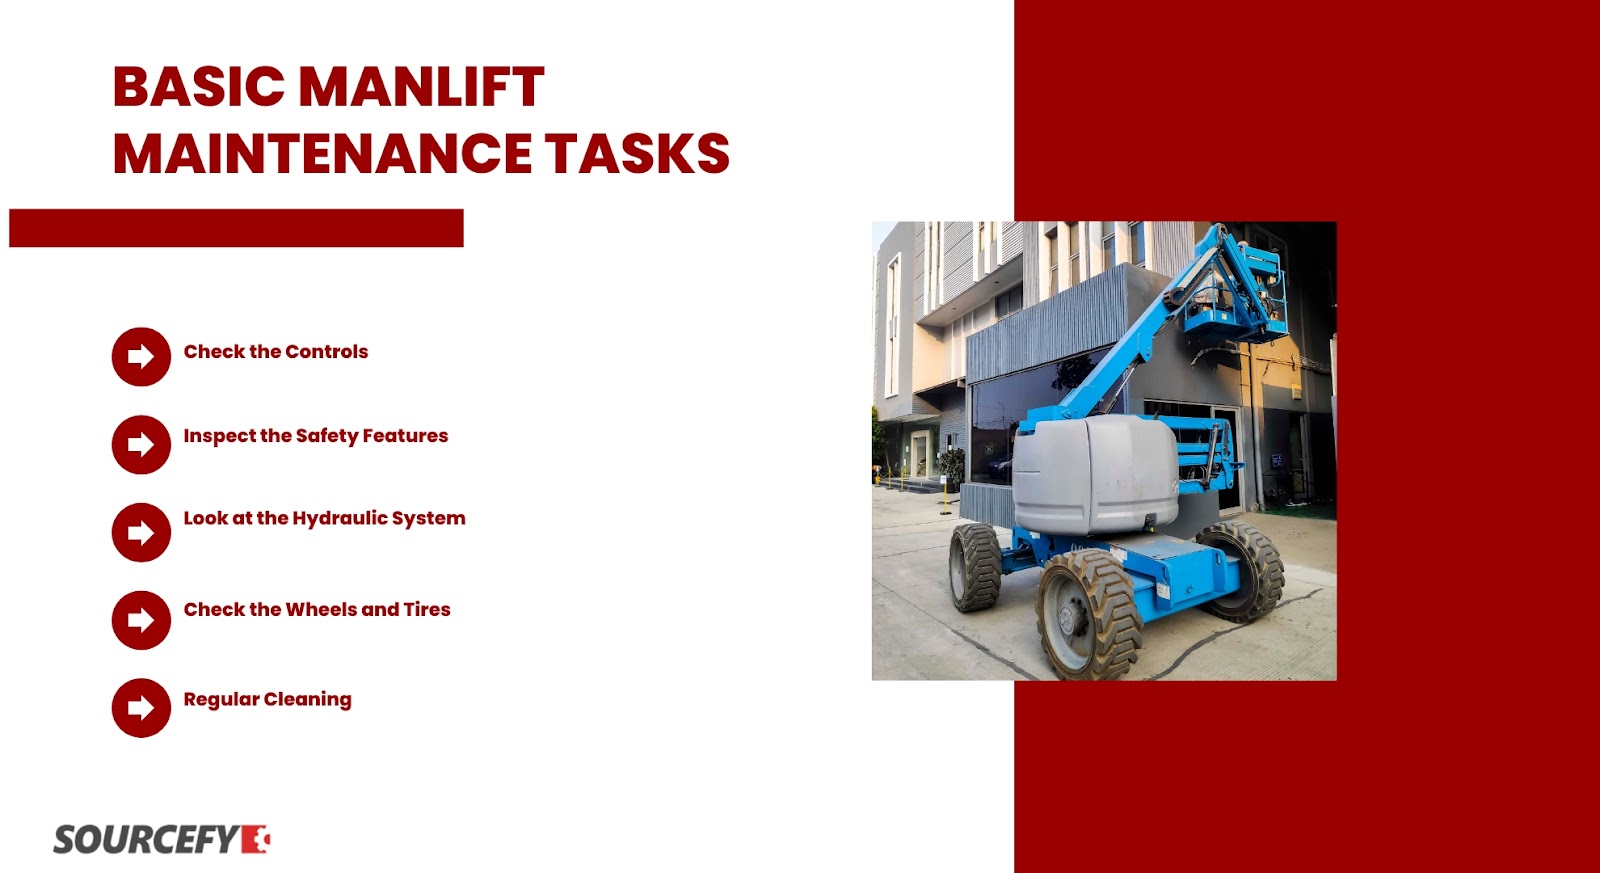 Step-by-Step Guide on Basic Manlift Maintenance Tasks